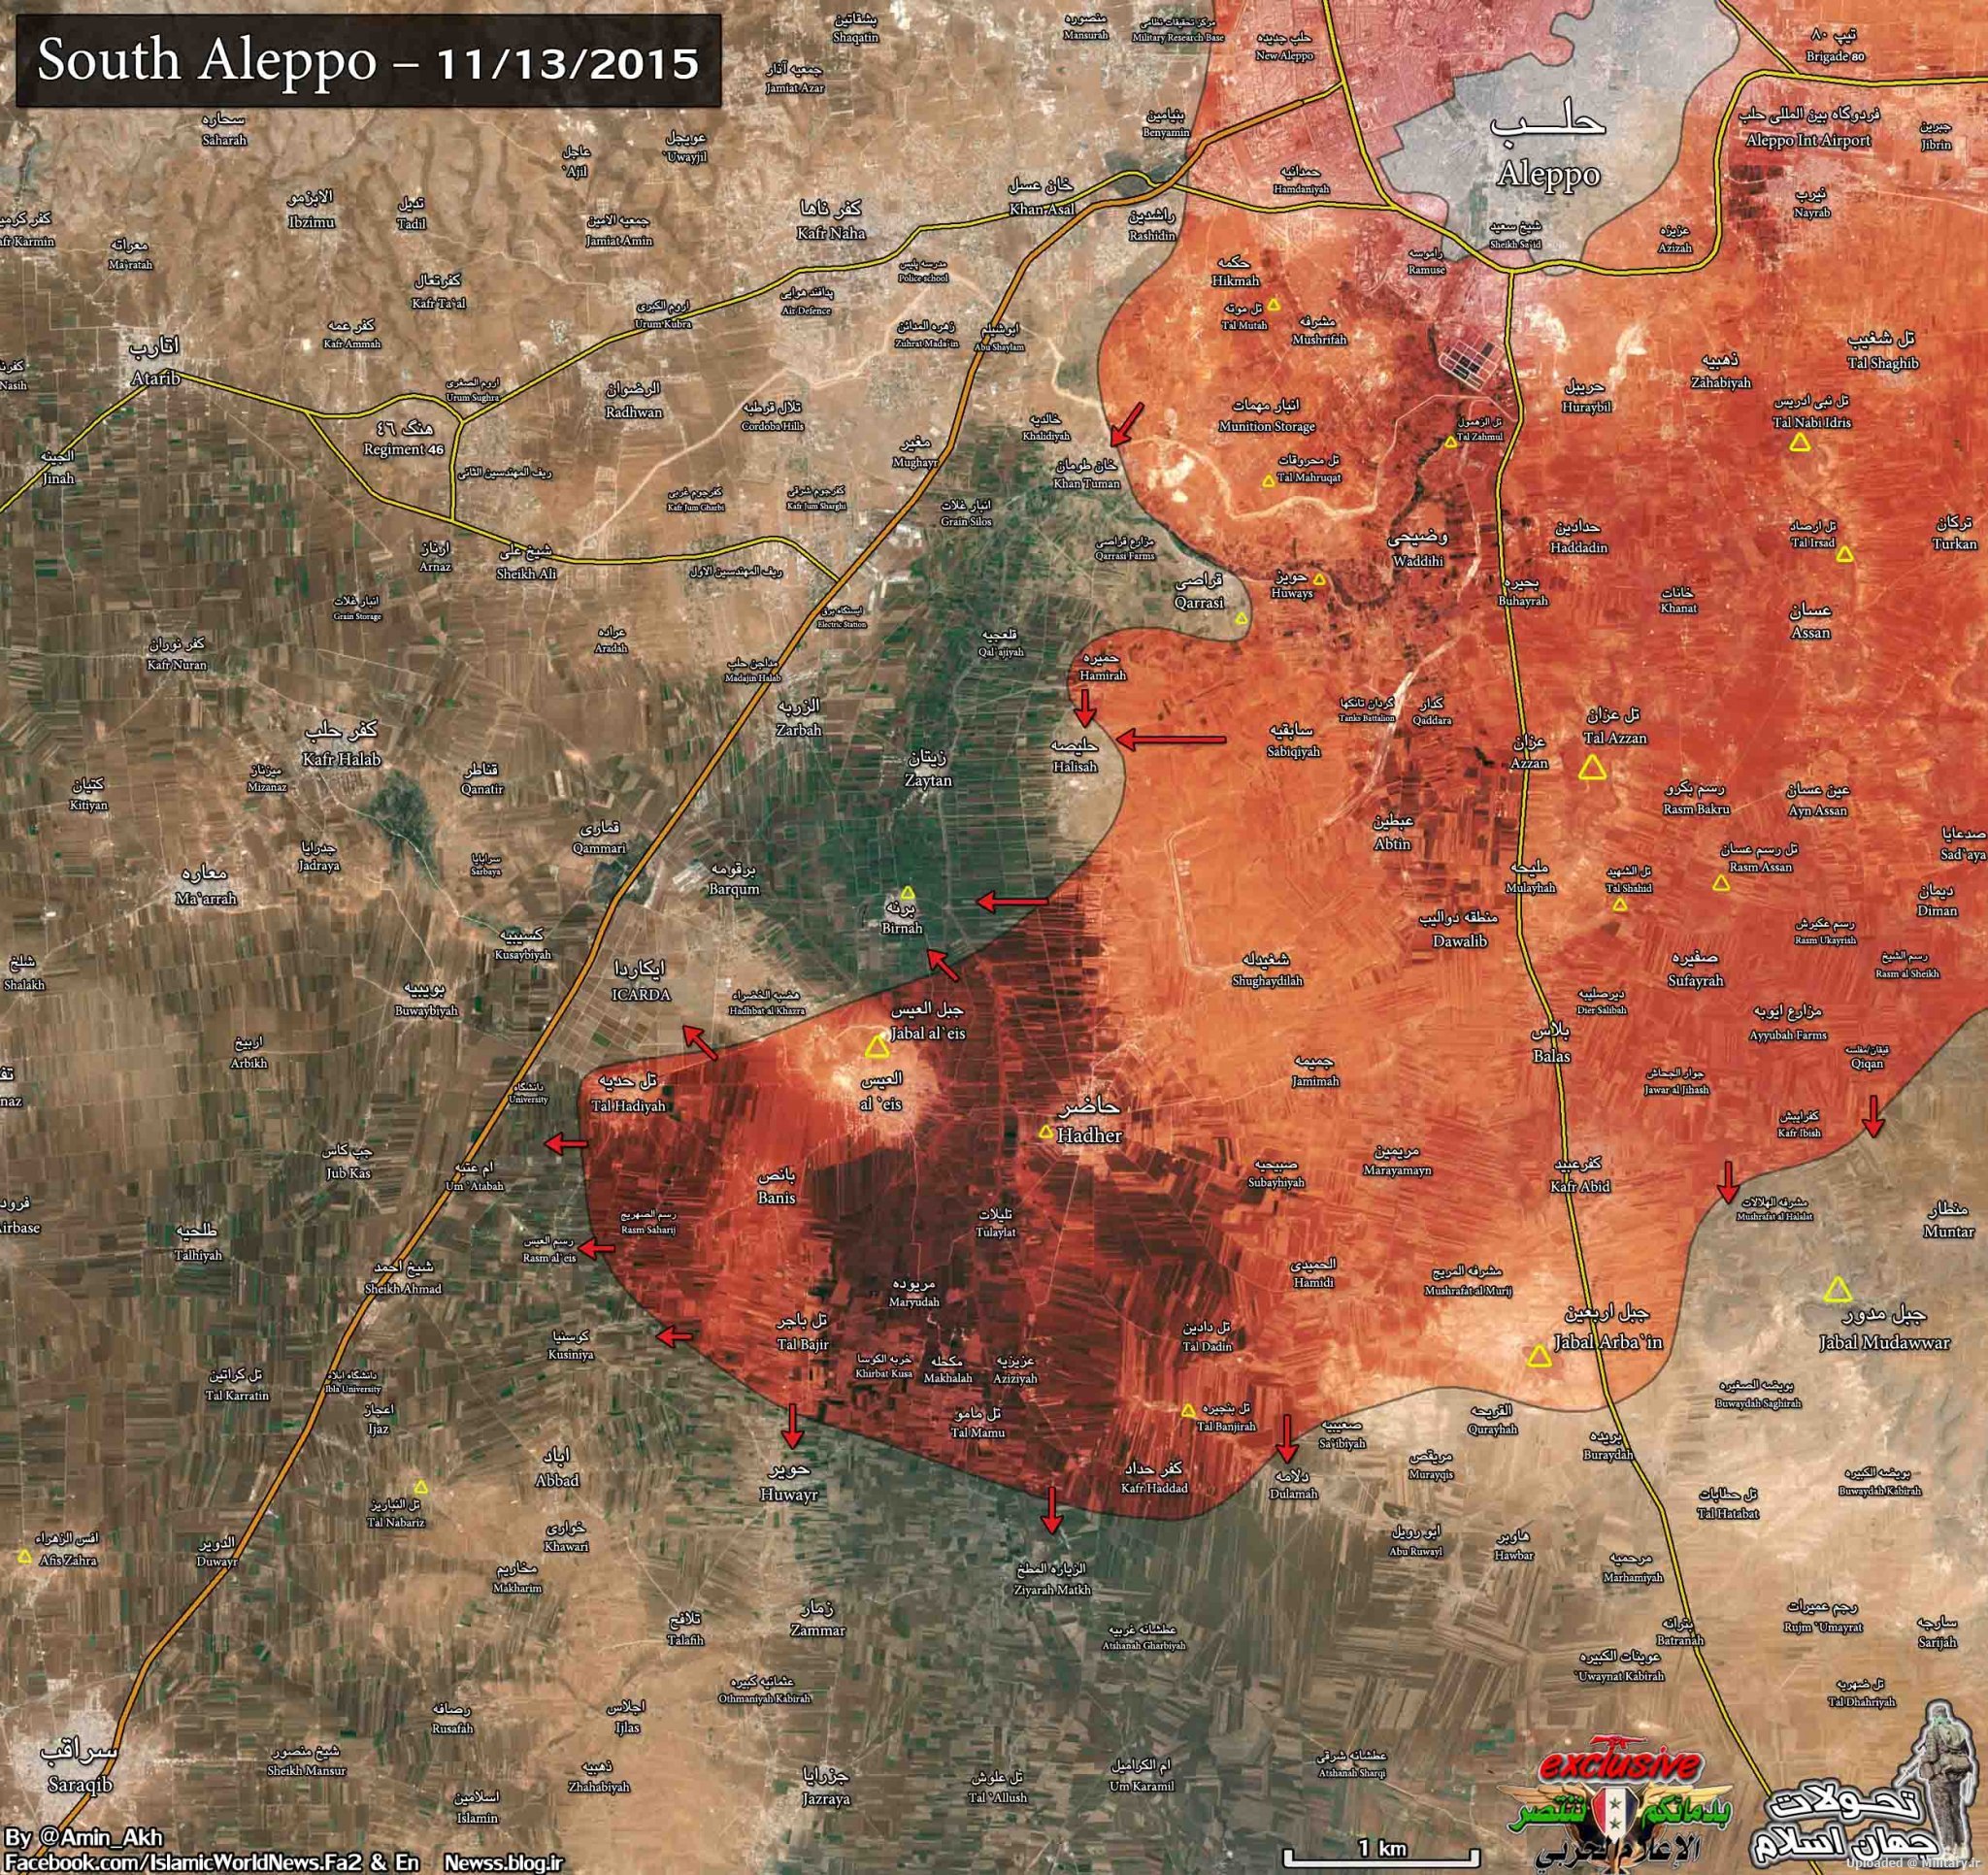 South_Aleppo_1km_cut1_13nov_22aban_low~0